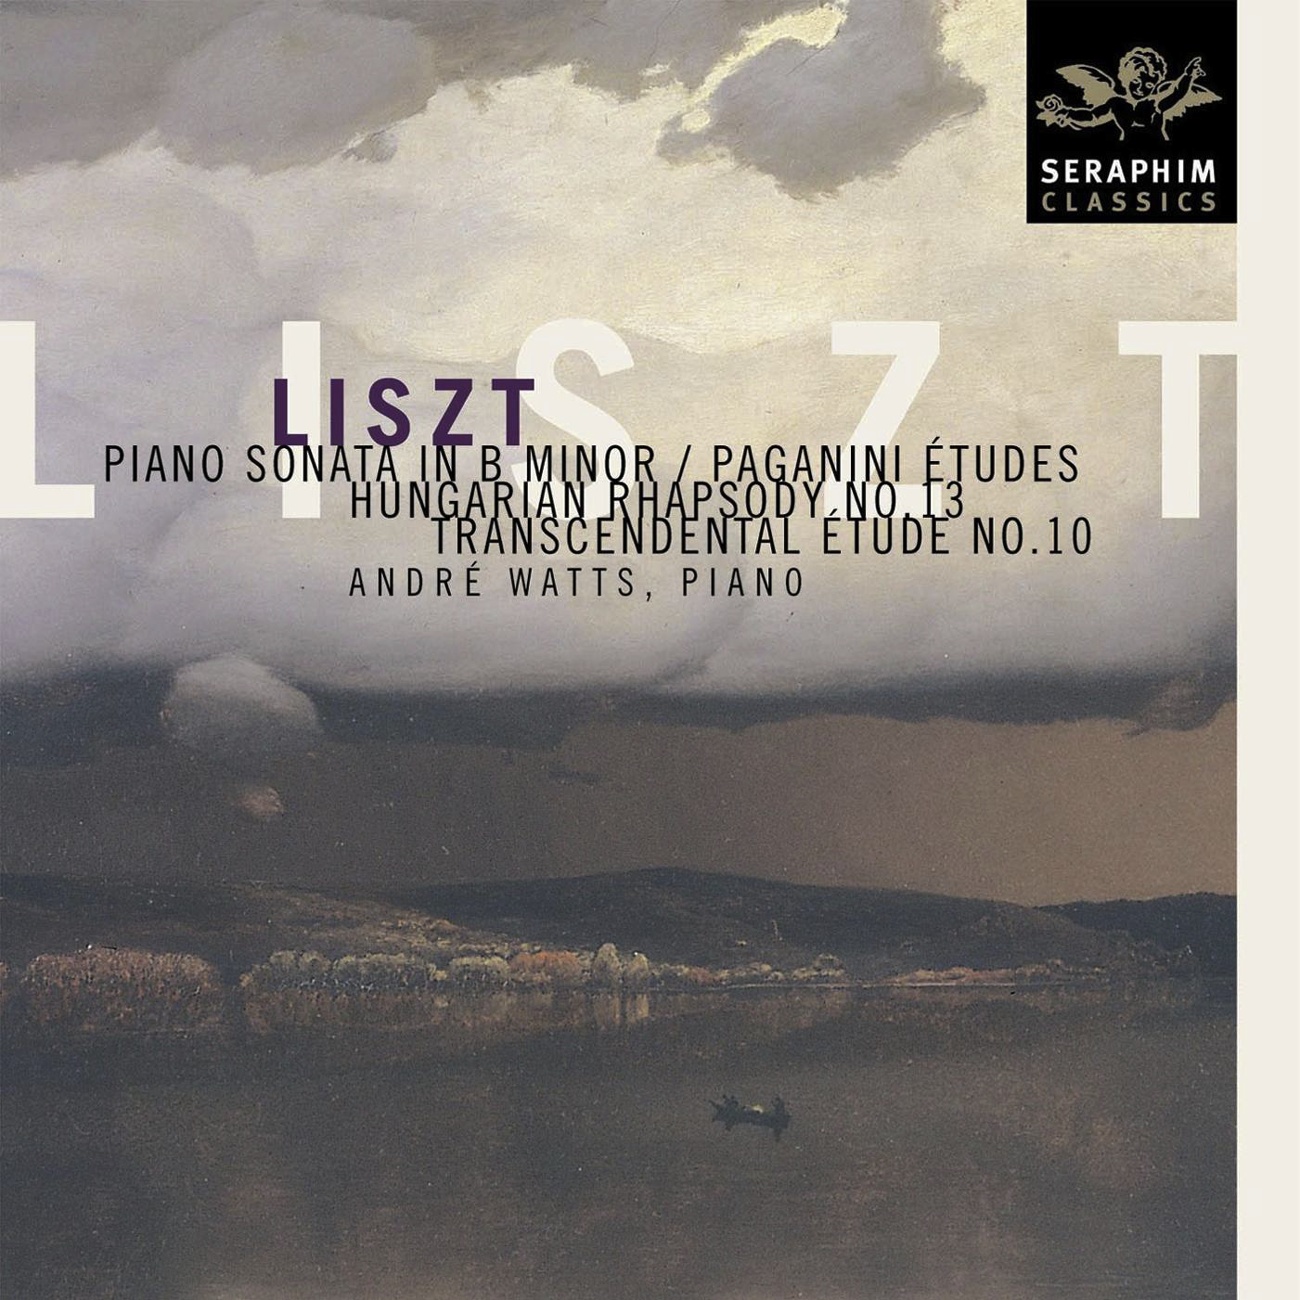 Liszt: Piano Sonata in B minor;Paganini Etudes;Hungarian Rhapsody No.13;Transcendental Etude No.10 